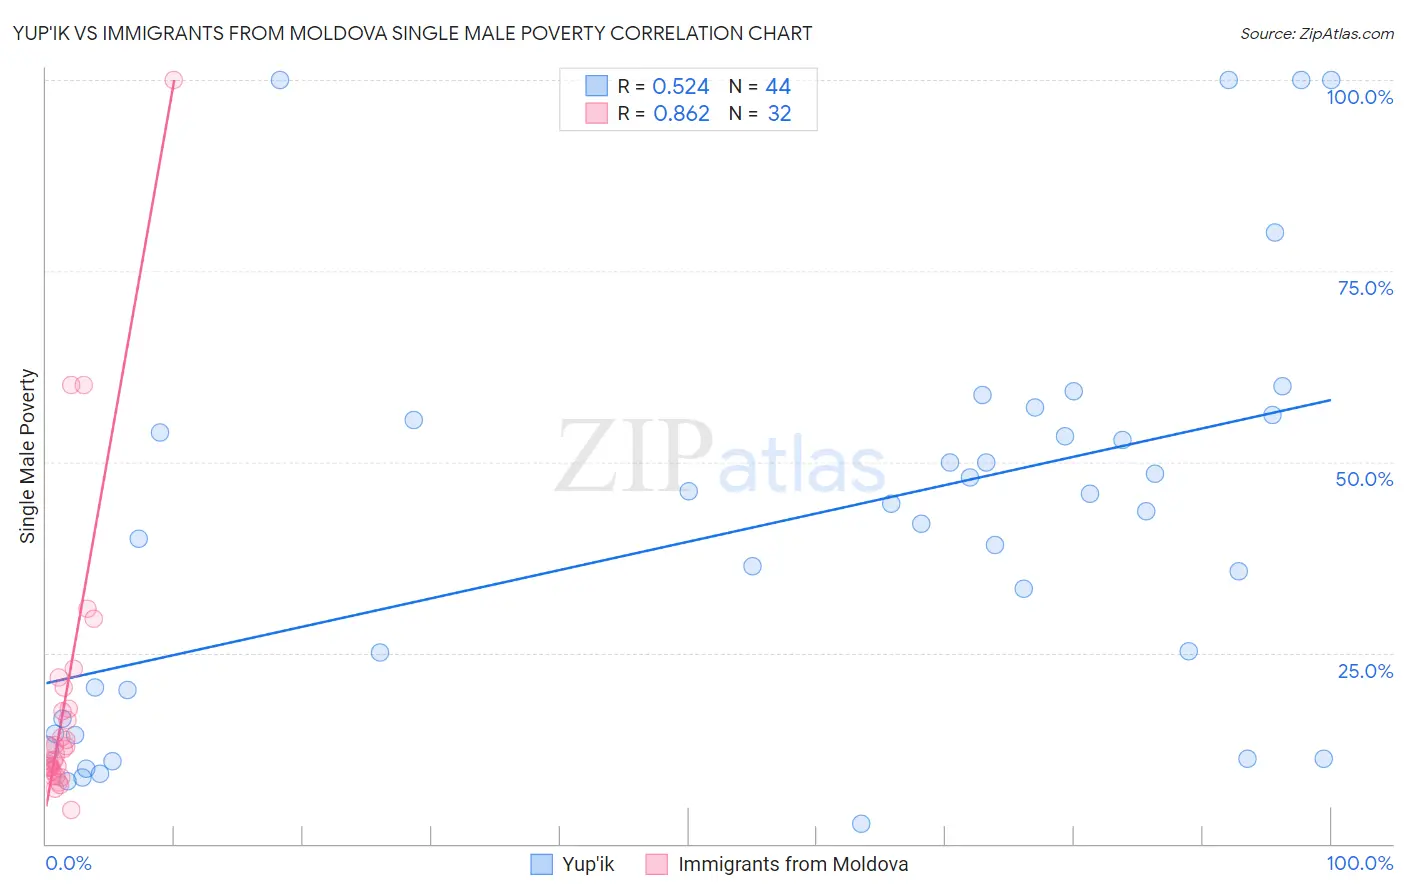 Yup'ik vs Immigrants from Moldova Single Male Poverty